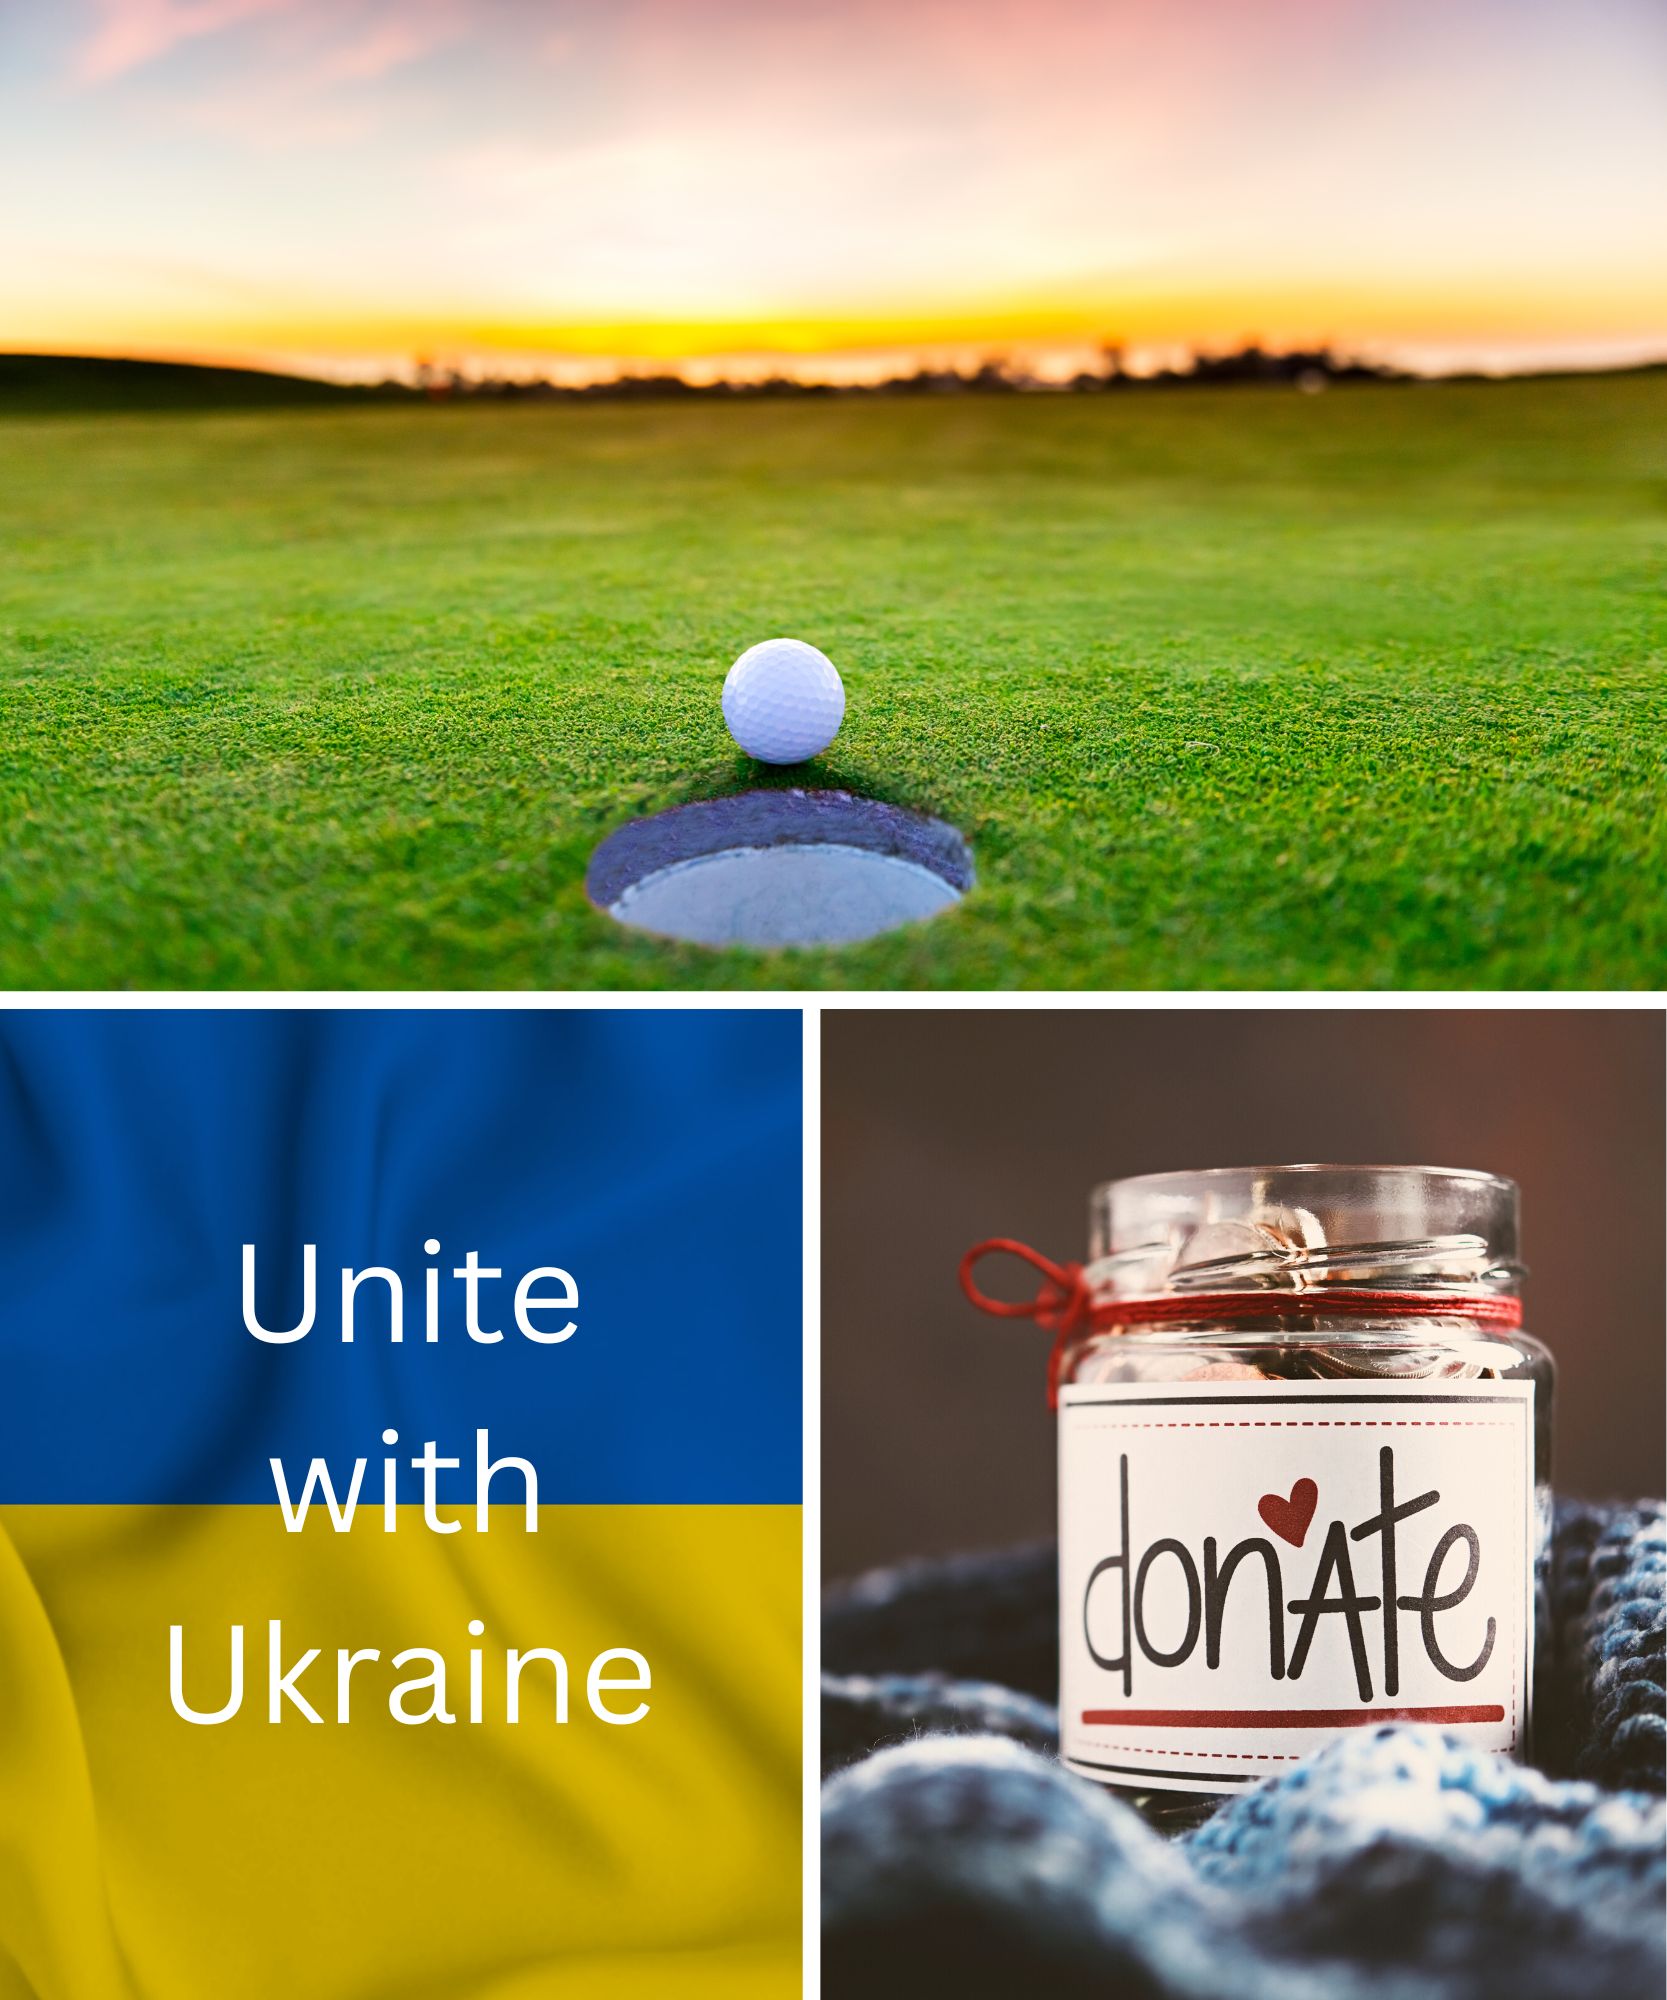 Rodan Employees Donate $4,000 to Unite With Ukraine Campaign